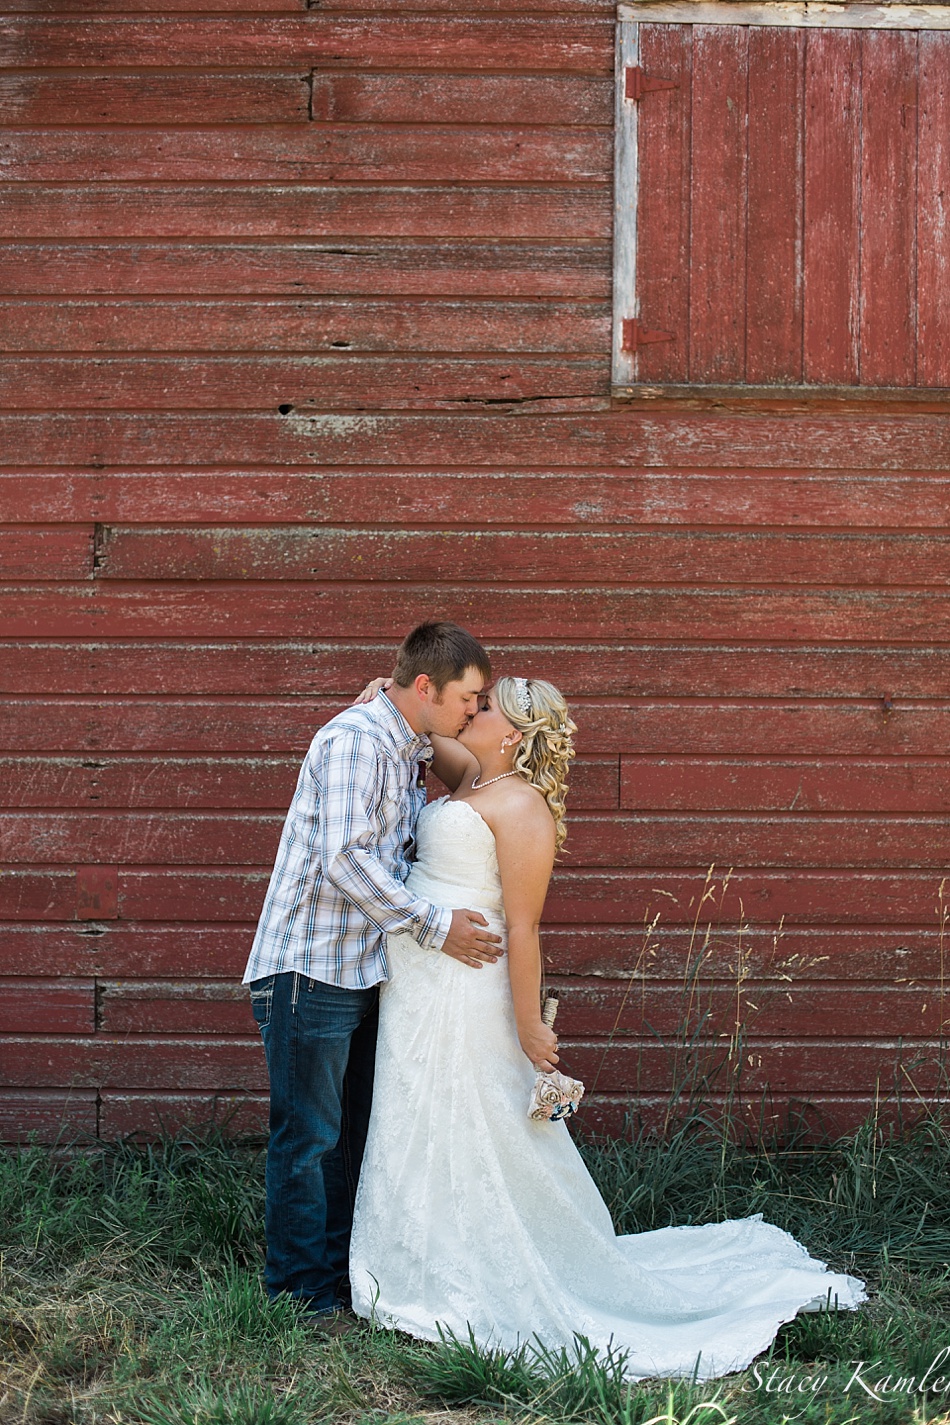 Big Red Barn - Wedding Portraits